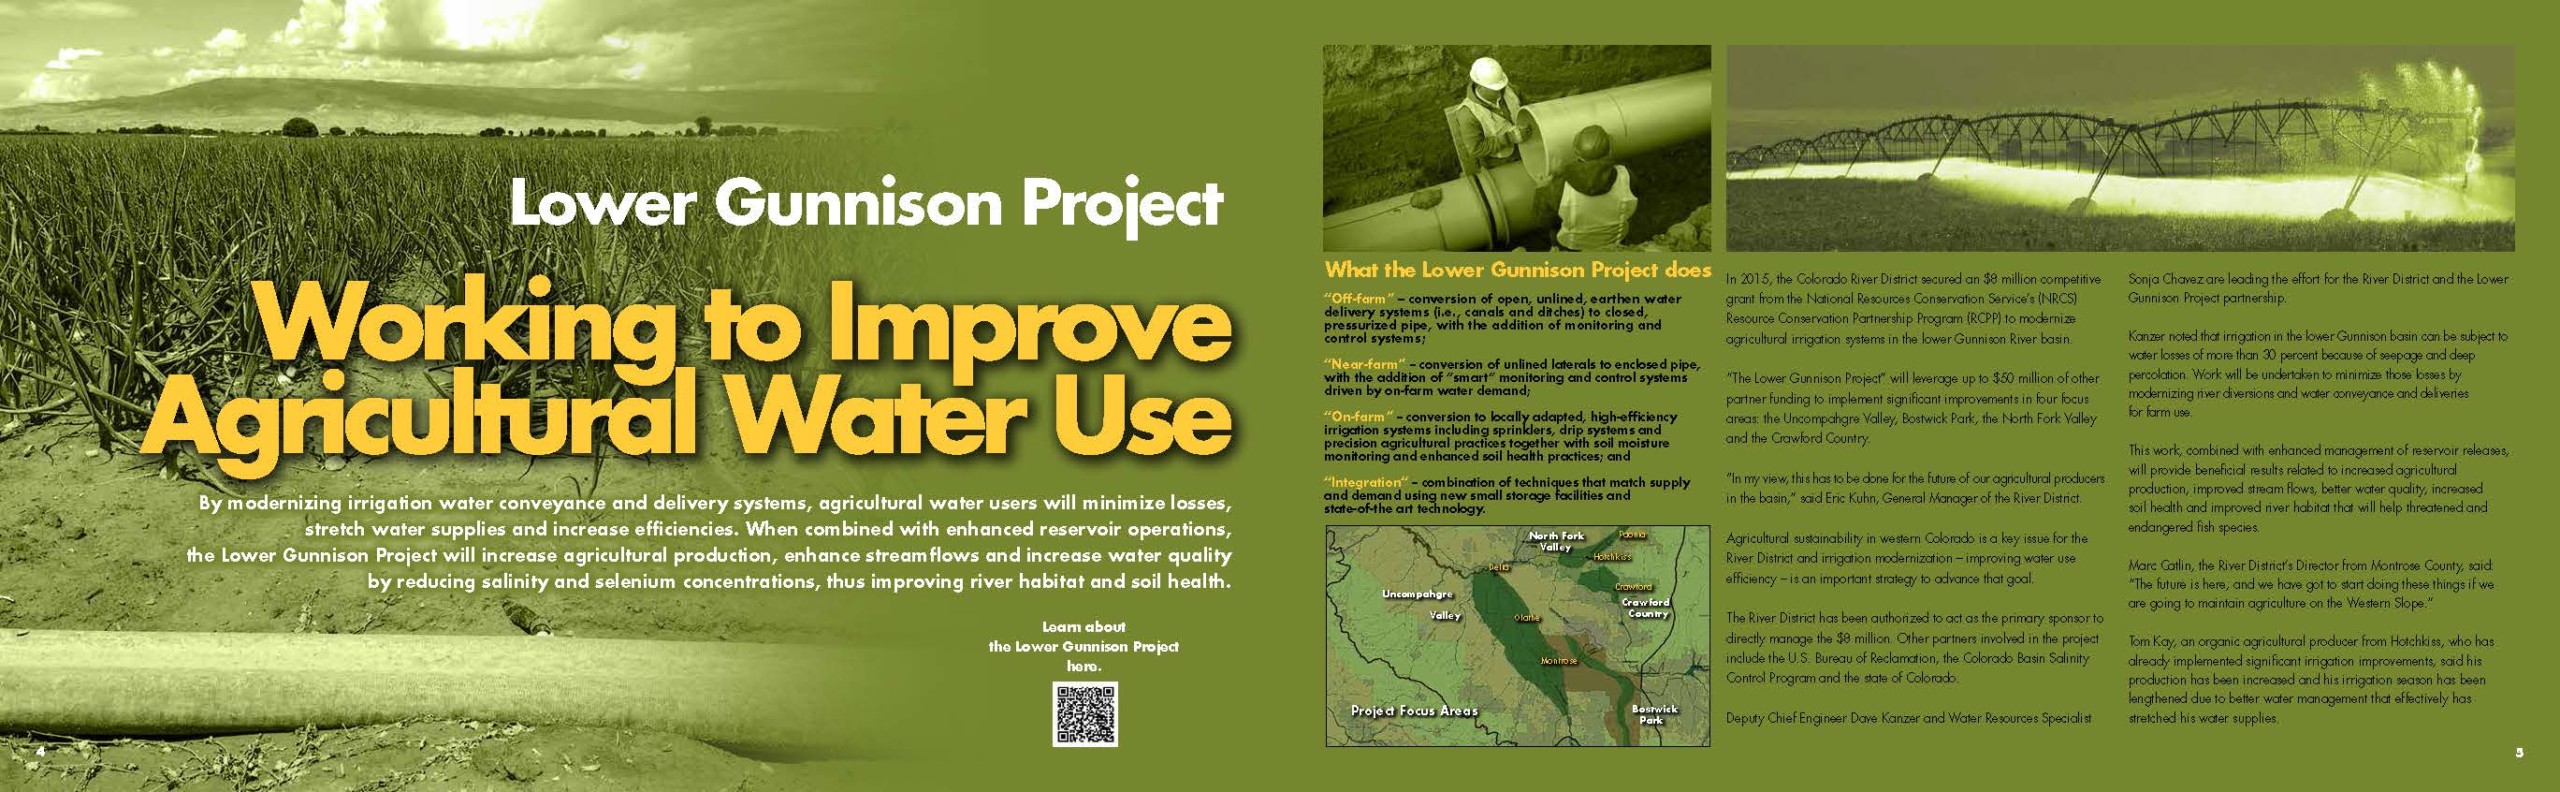 Lower Gunnison Project